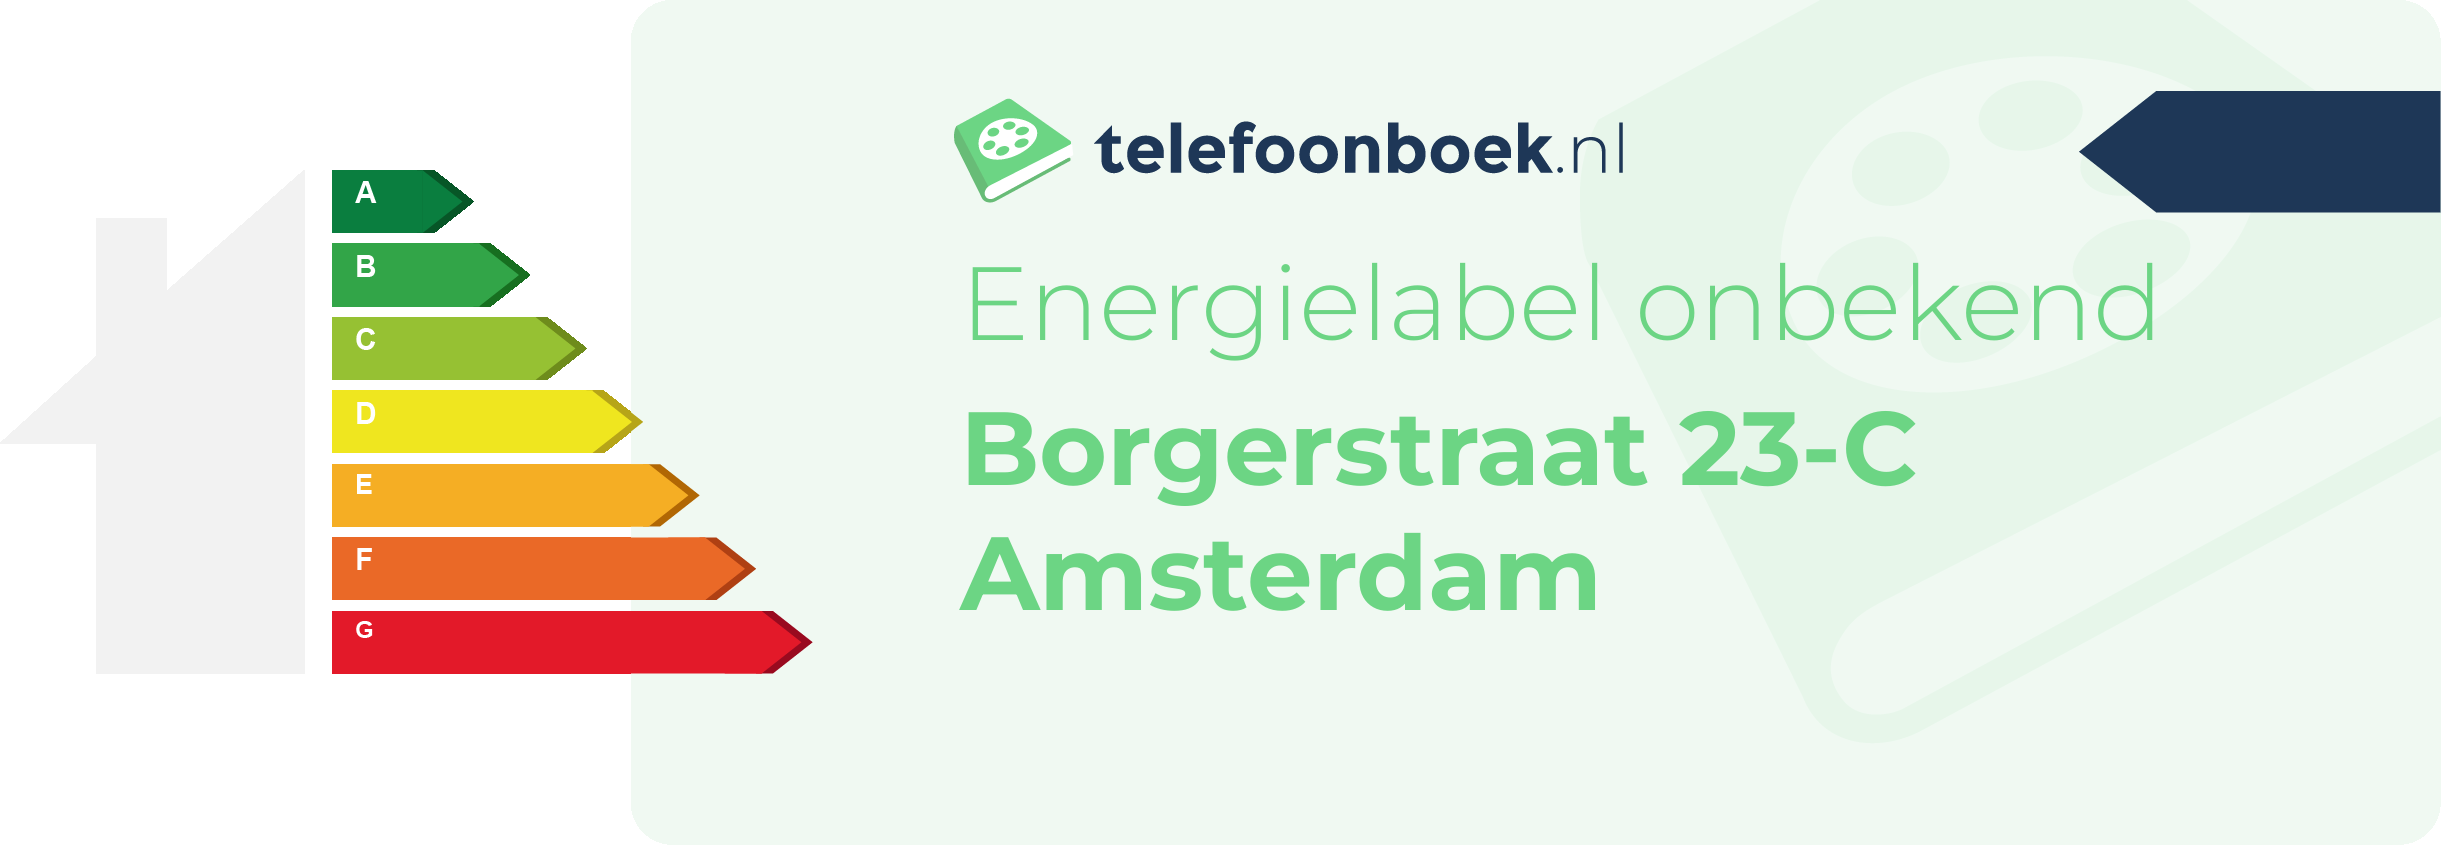 Energielabel Borgerstraat 23-C Amsterdam